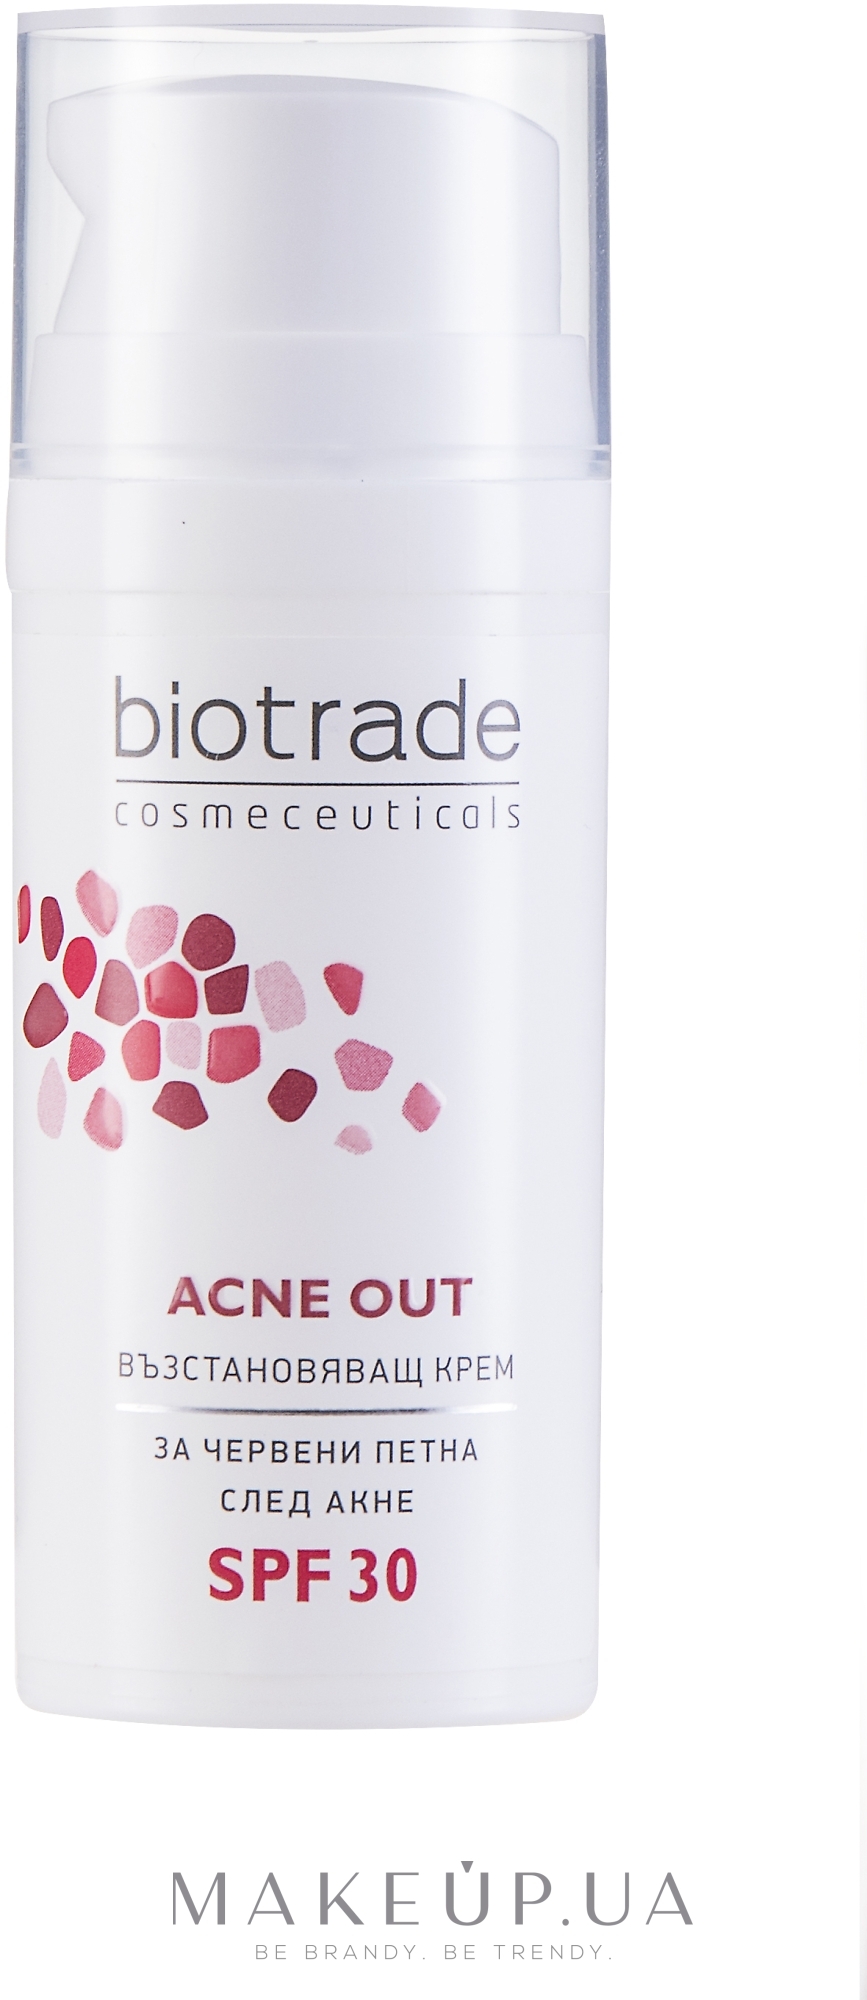 Восстанавливающий крем с SPF 30 для кожи с постакне - Biotrade ACNE OUT SPF 30 — фото 30g